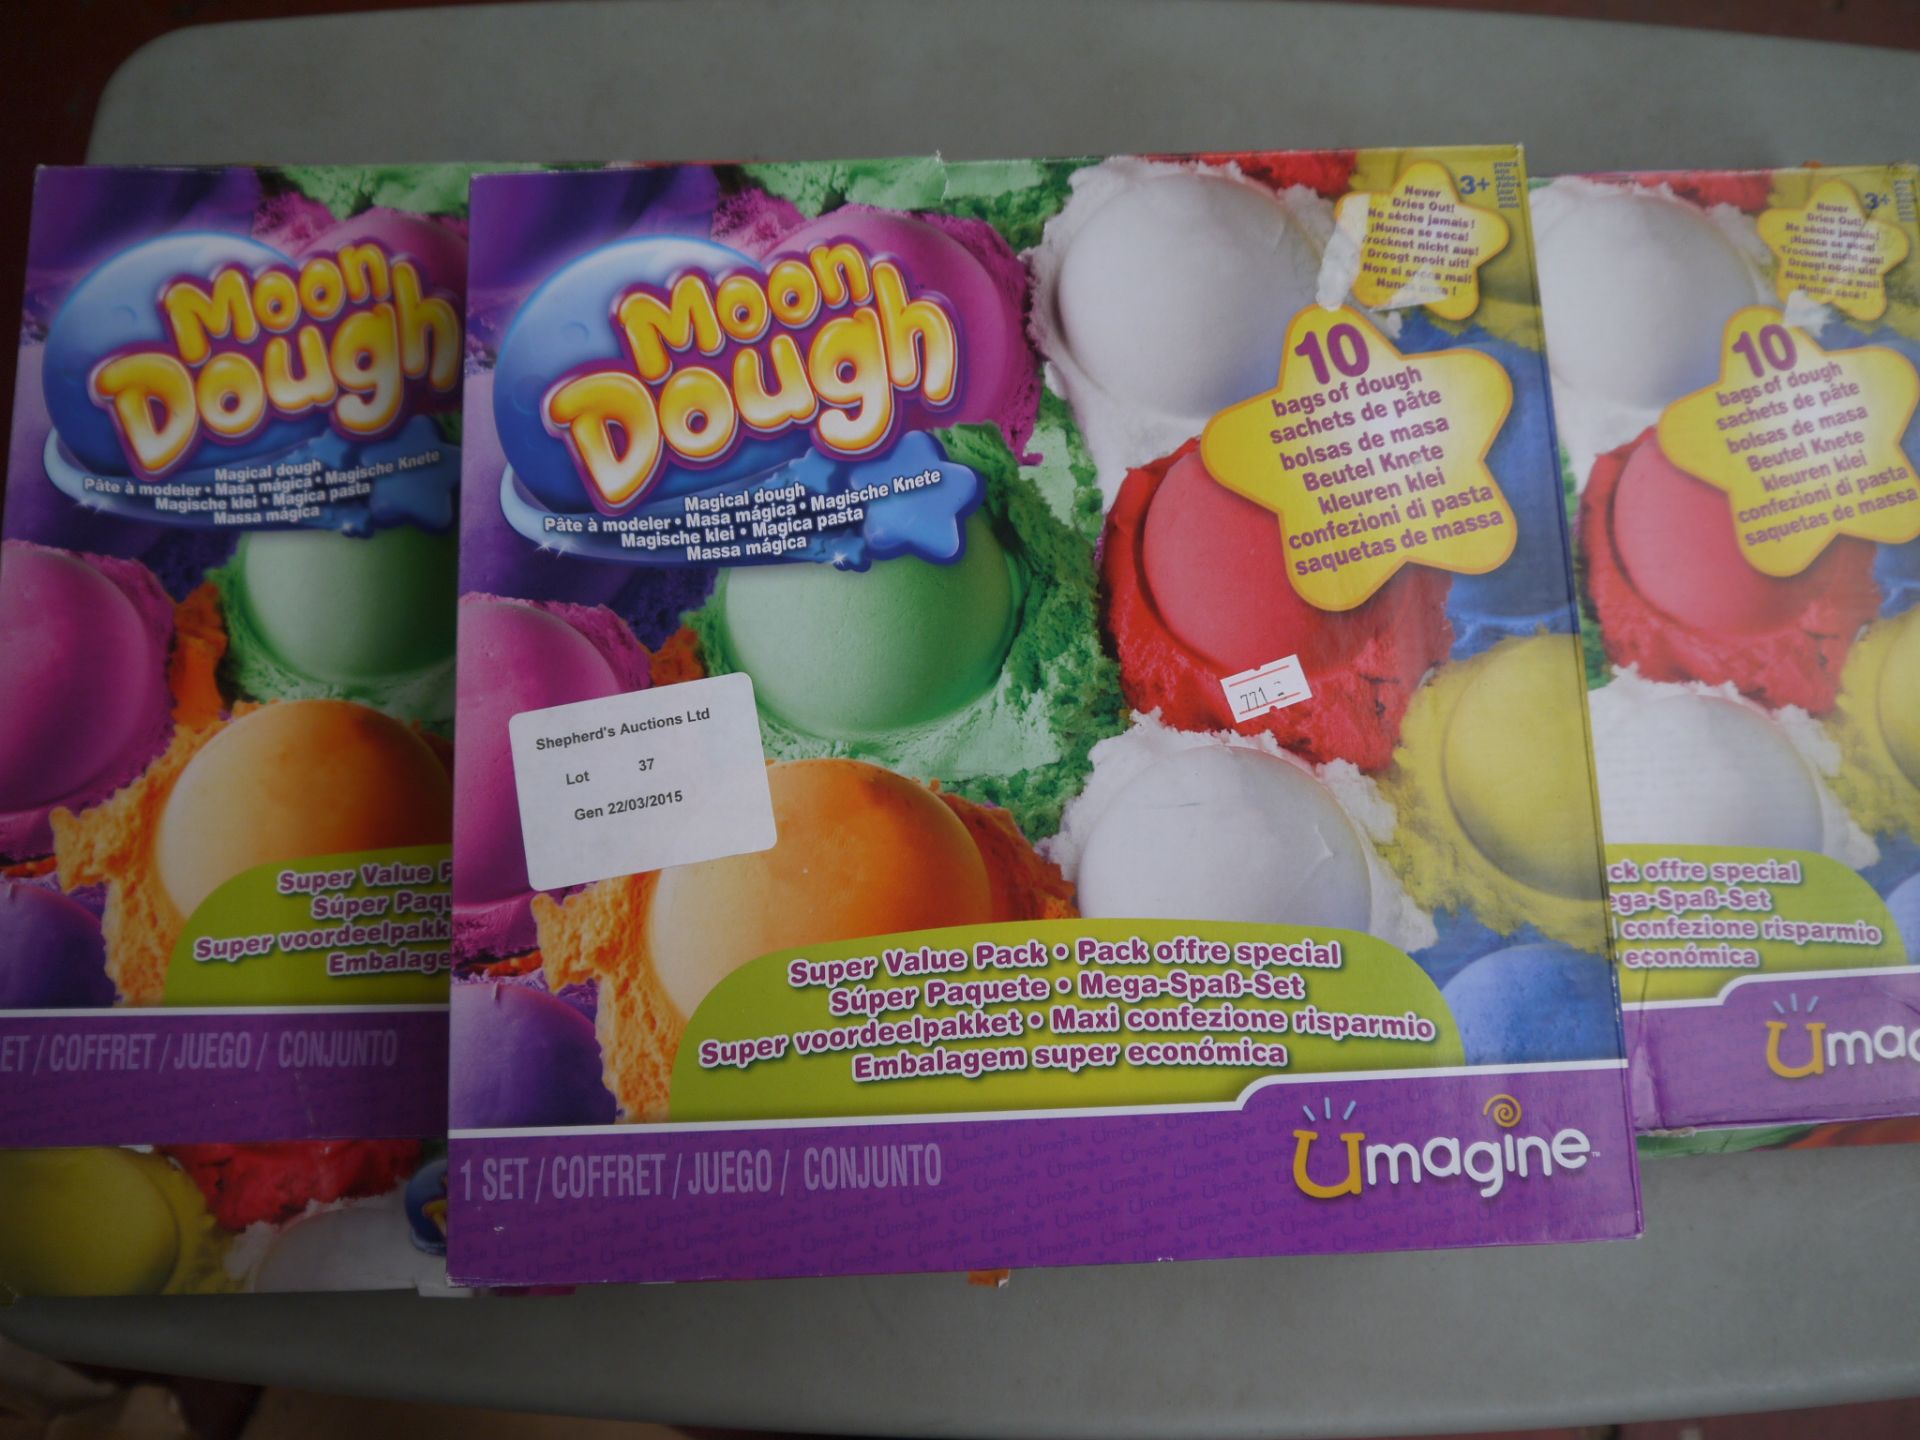 3x Moon Dough, 10 bags of magical sachets of dough. Boxed.